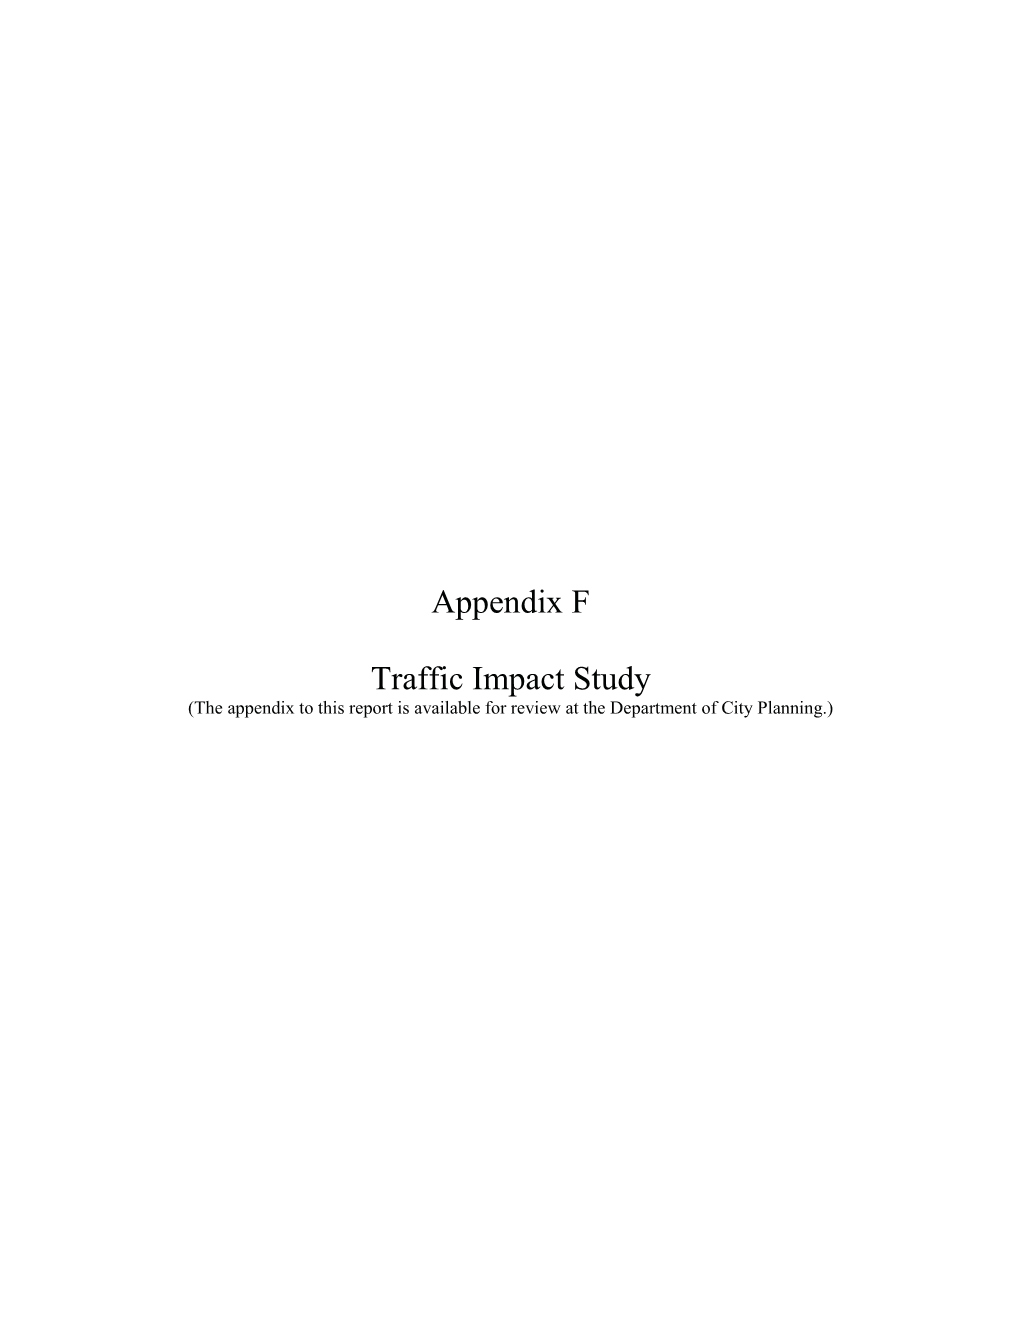 F. Traffic Impact Study